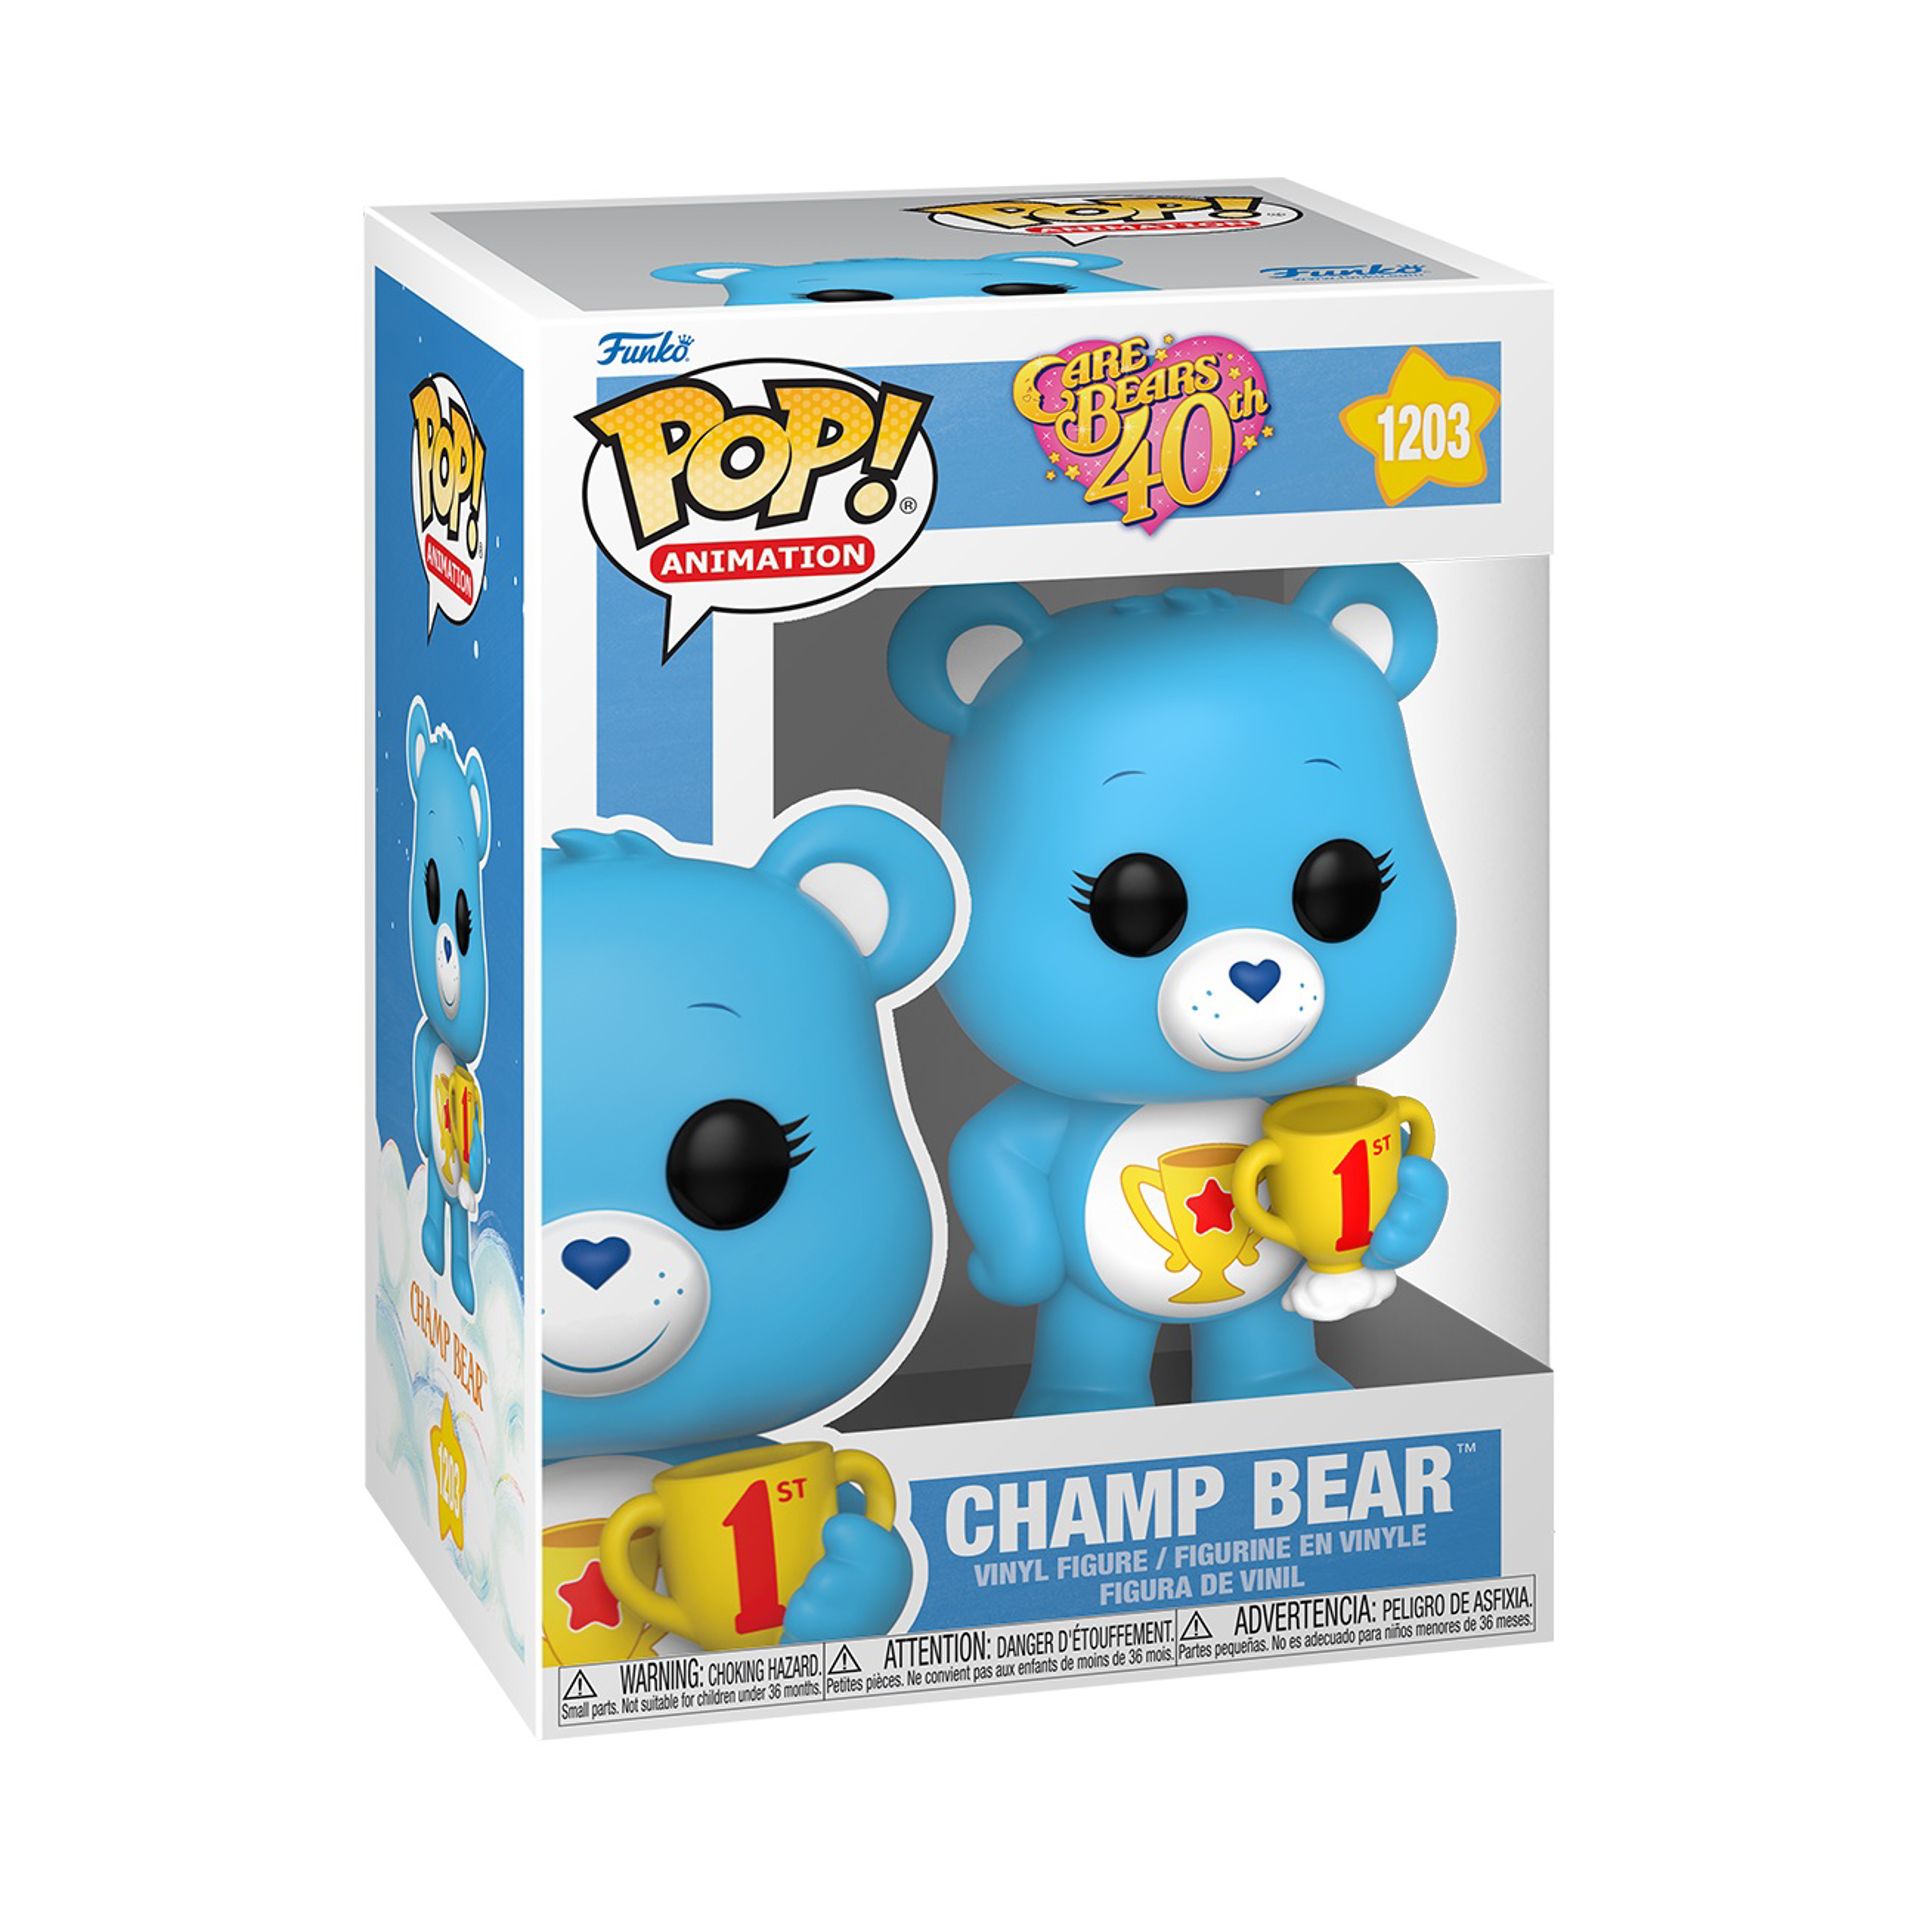 Funko Pop! Animation: Care Bears 40th Anniversary - Champ Bear (